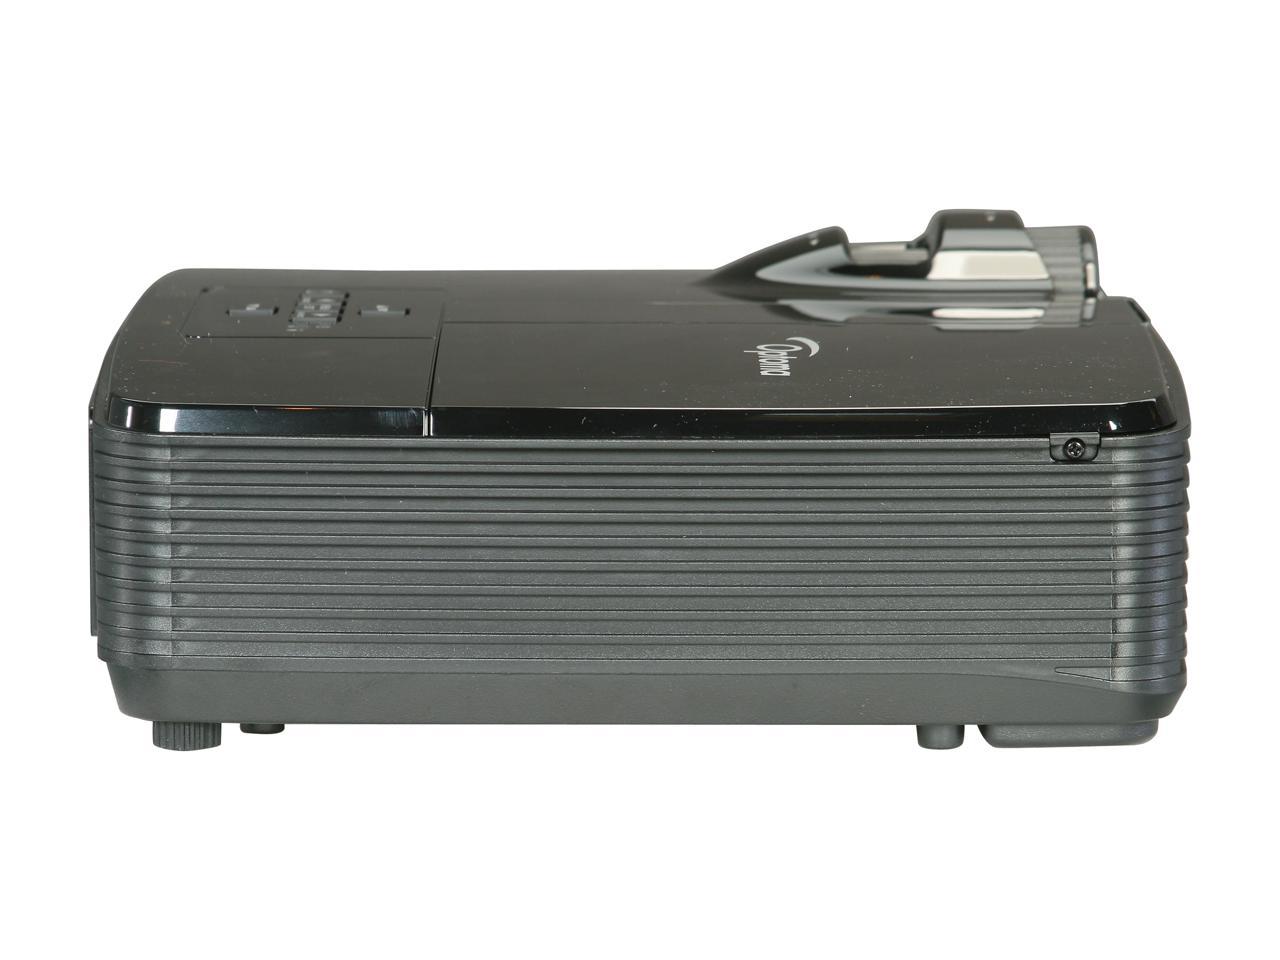 Optoma DS550 SVGA 800 x 600 2600 ANSI Lumens DLP Projector - Newegg.com